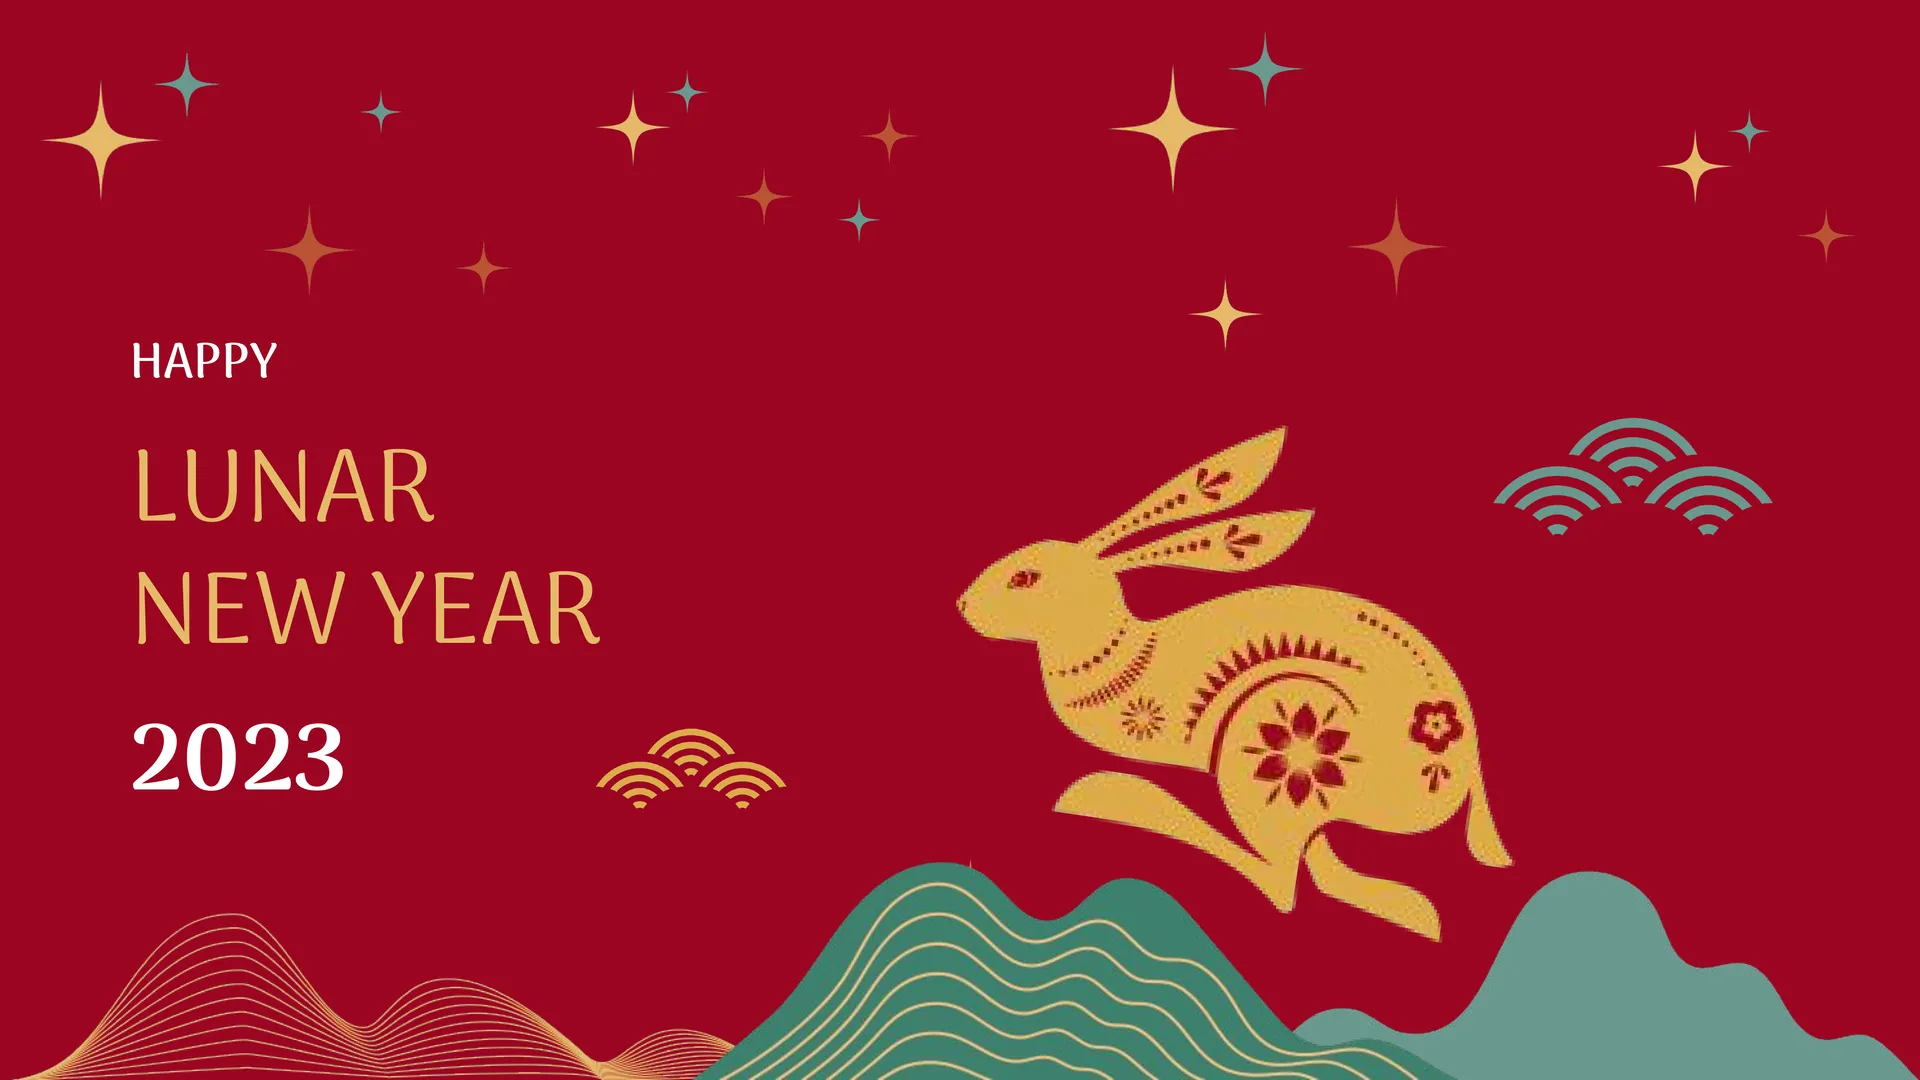 Lunar New Year Template